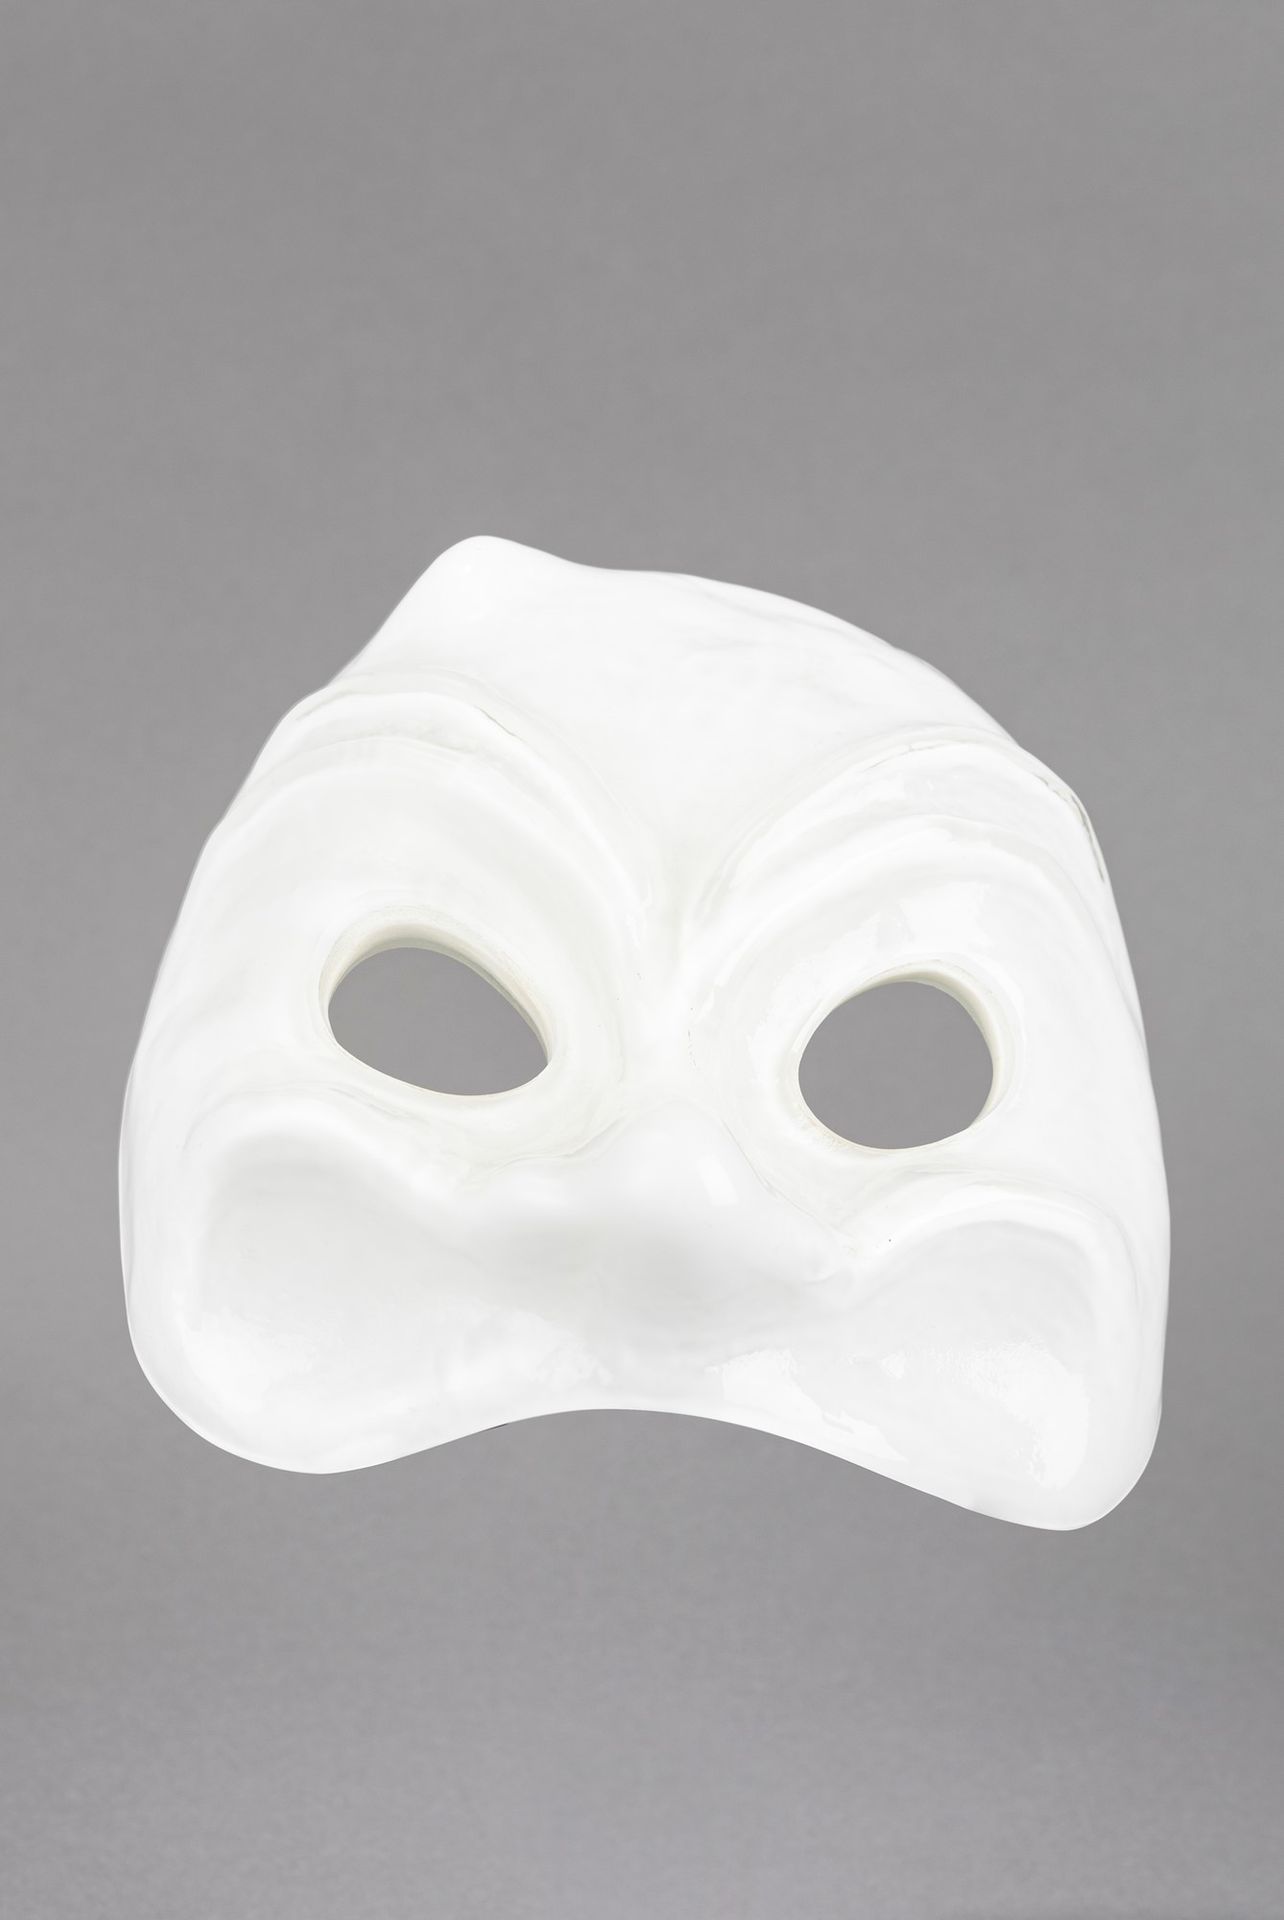 VENINI Máscara, 1990

h 17 x 17 x 10 cm
incamiciato vidrio blanco opalino.

Firm&hellip;